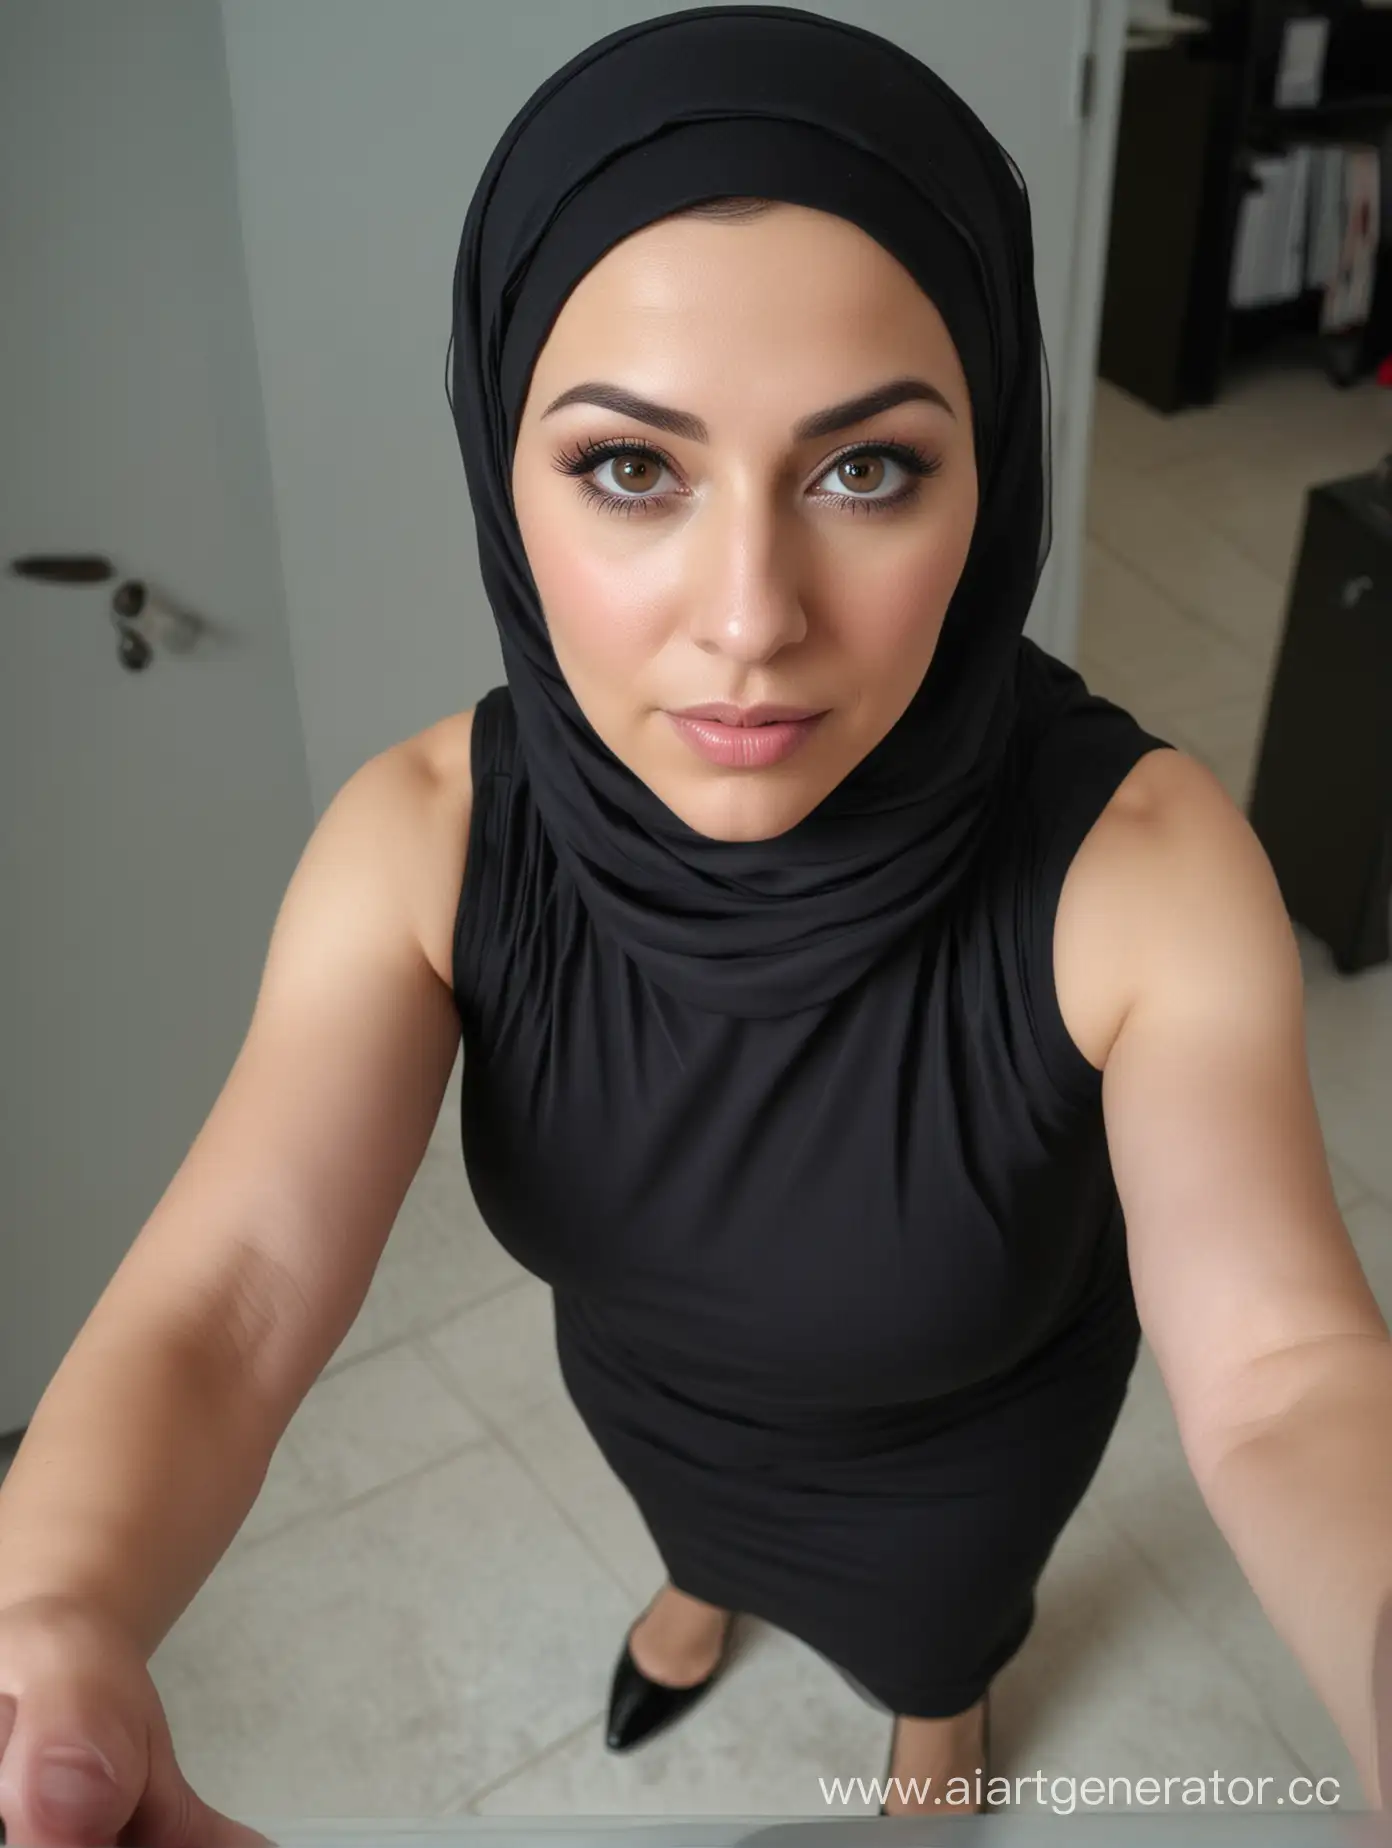 Kurdish-Dwarf-Woman-45-in-Office-Attire-with-Hijab-and-Curvy-Style